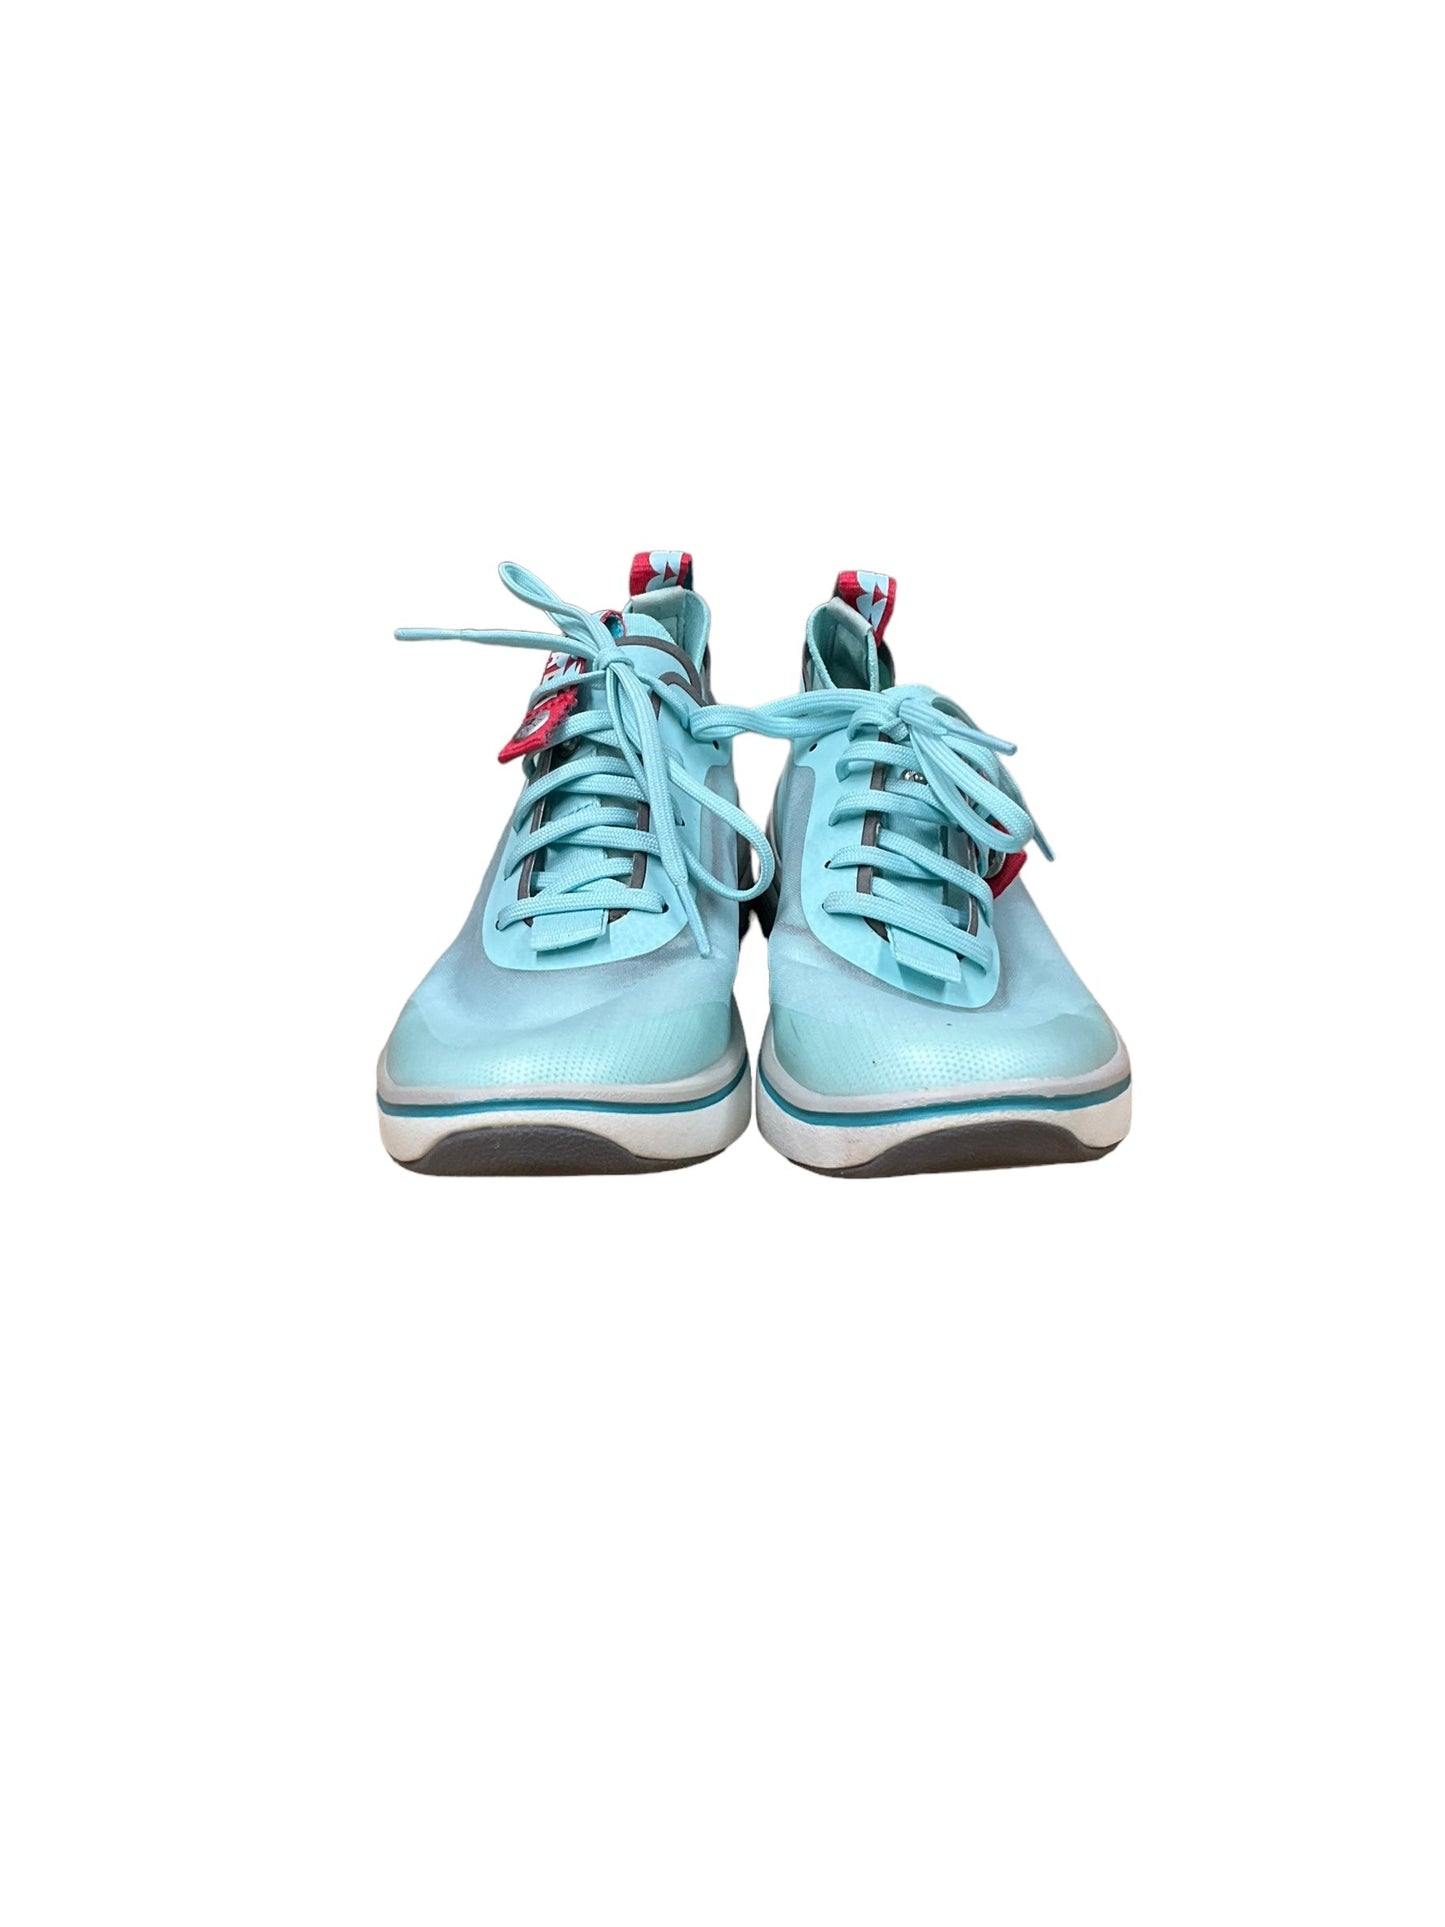 Blue & White Shoes Athletic Cmc, Size 6